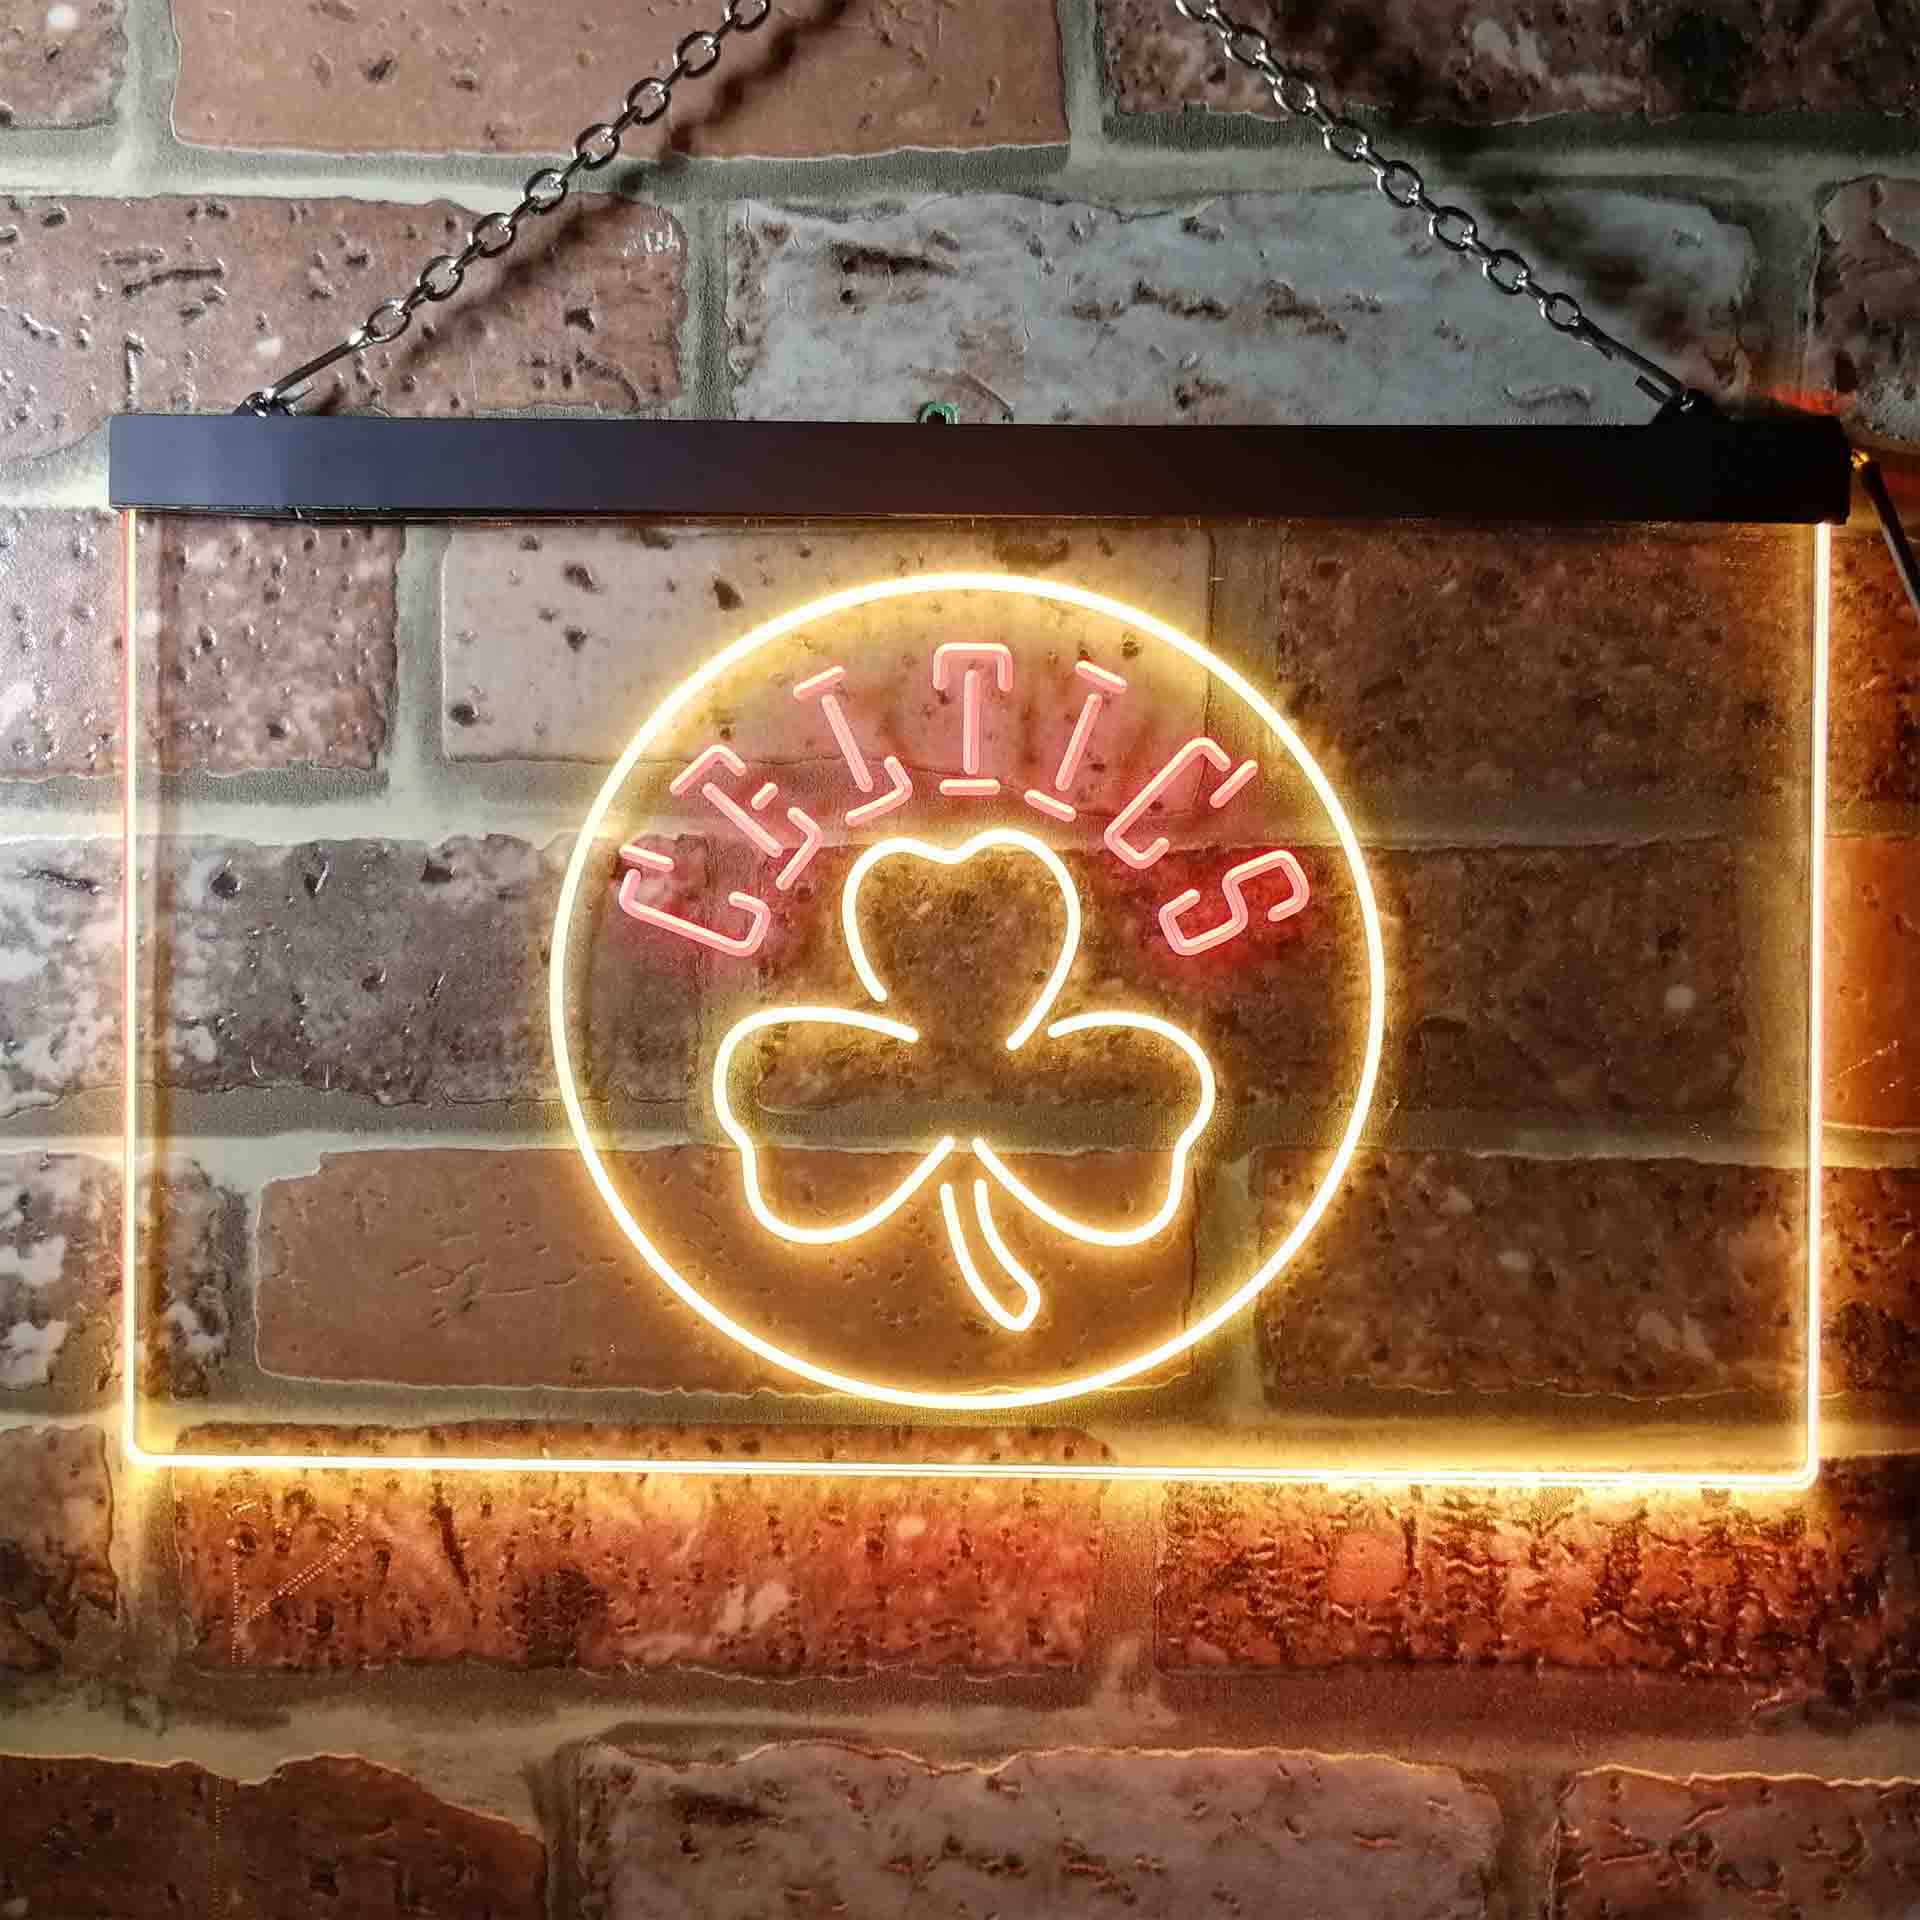 Boston Celtics LED Neon Sign